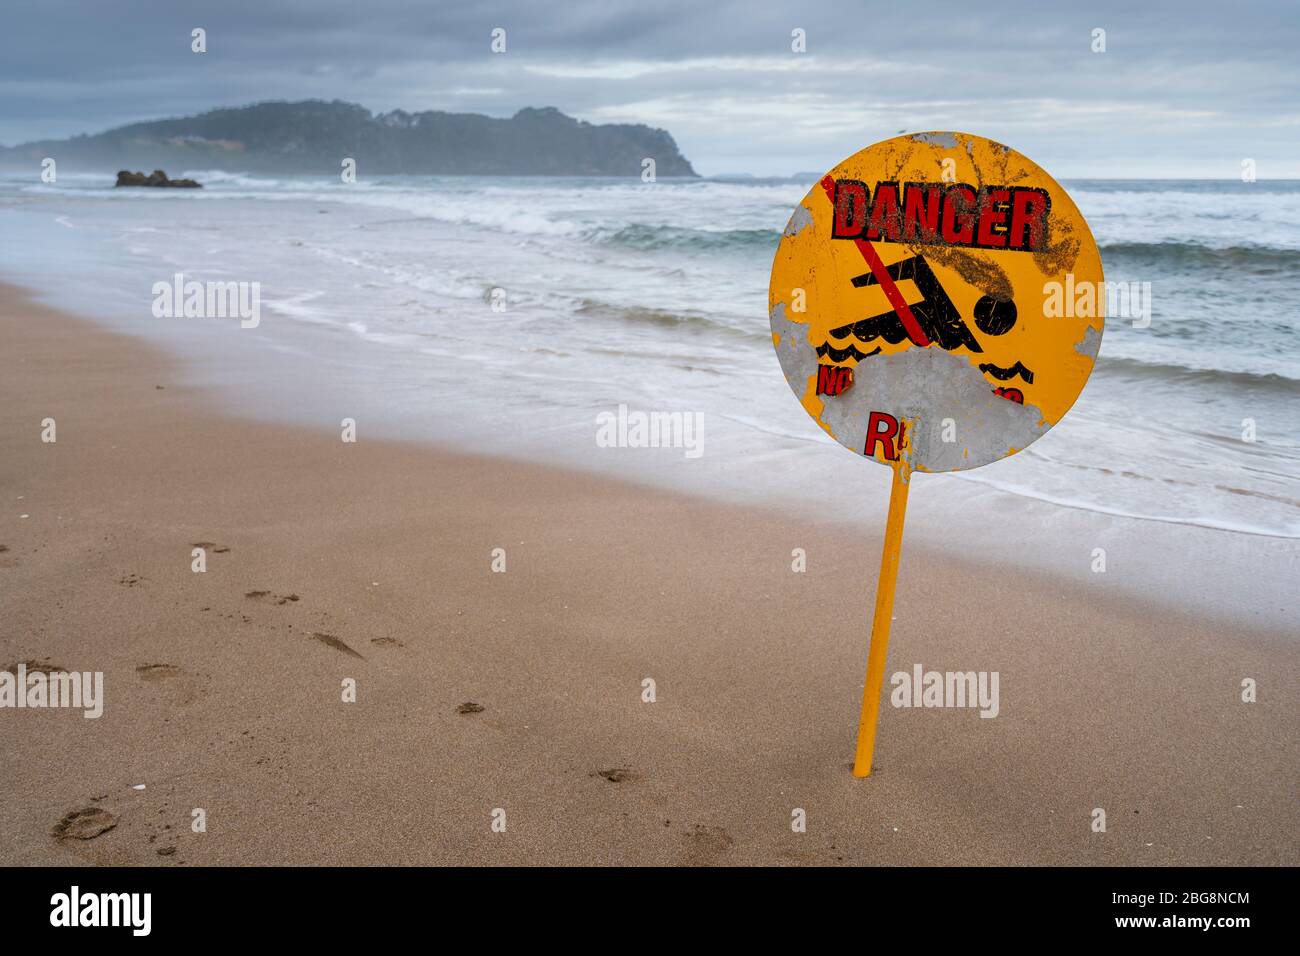 Danger sign on Hot Water Beach, Hahei, Coromandel Peninsula, North Island, New Zealand Stock Photo